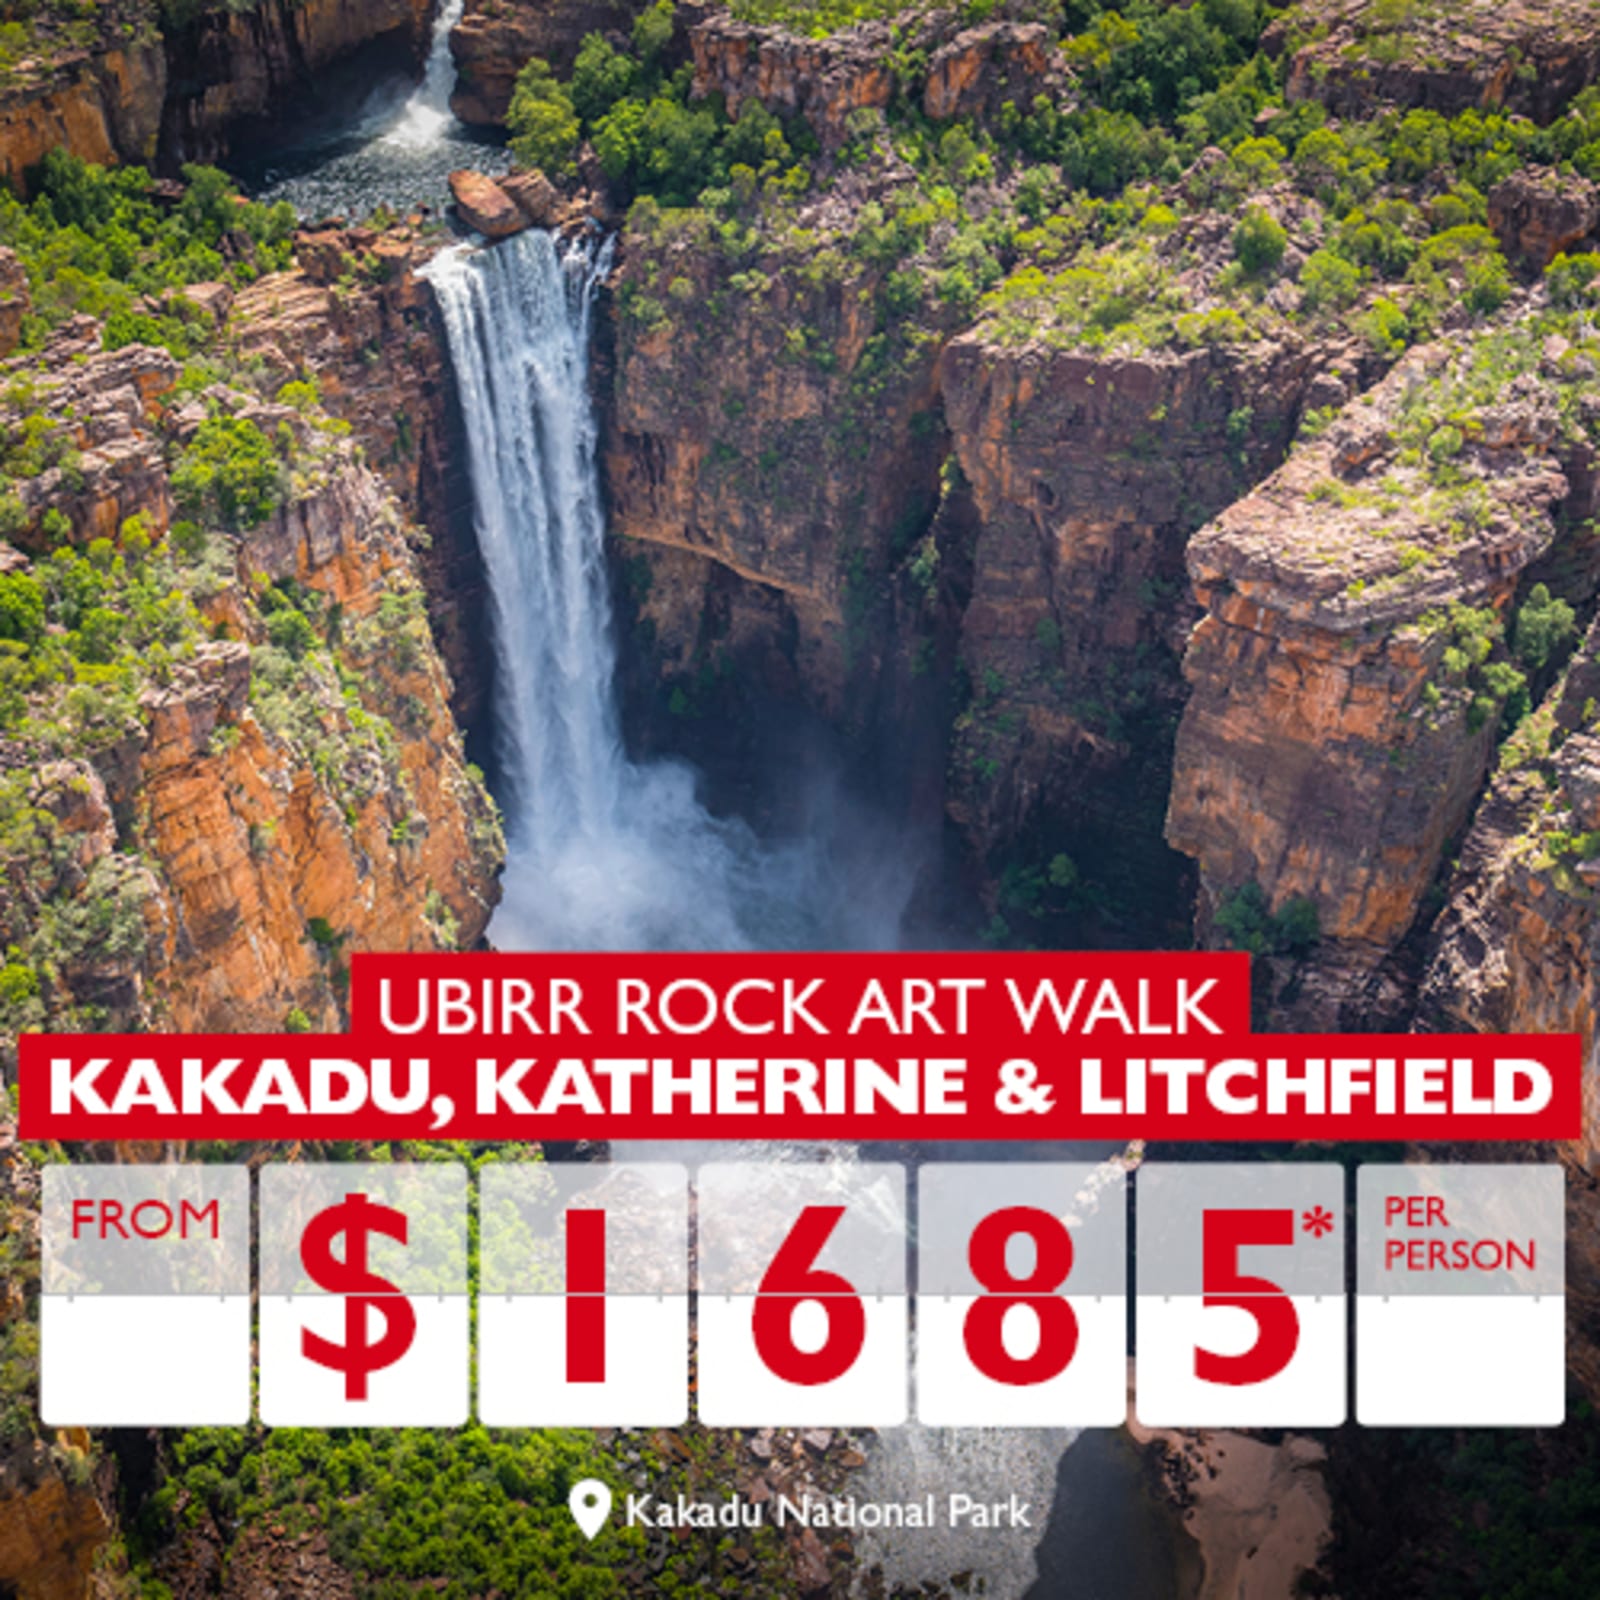 Ubirr Rock Art Walk | Kakadu, Katherine & Litchfield from $1685* per person